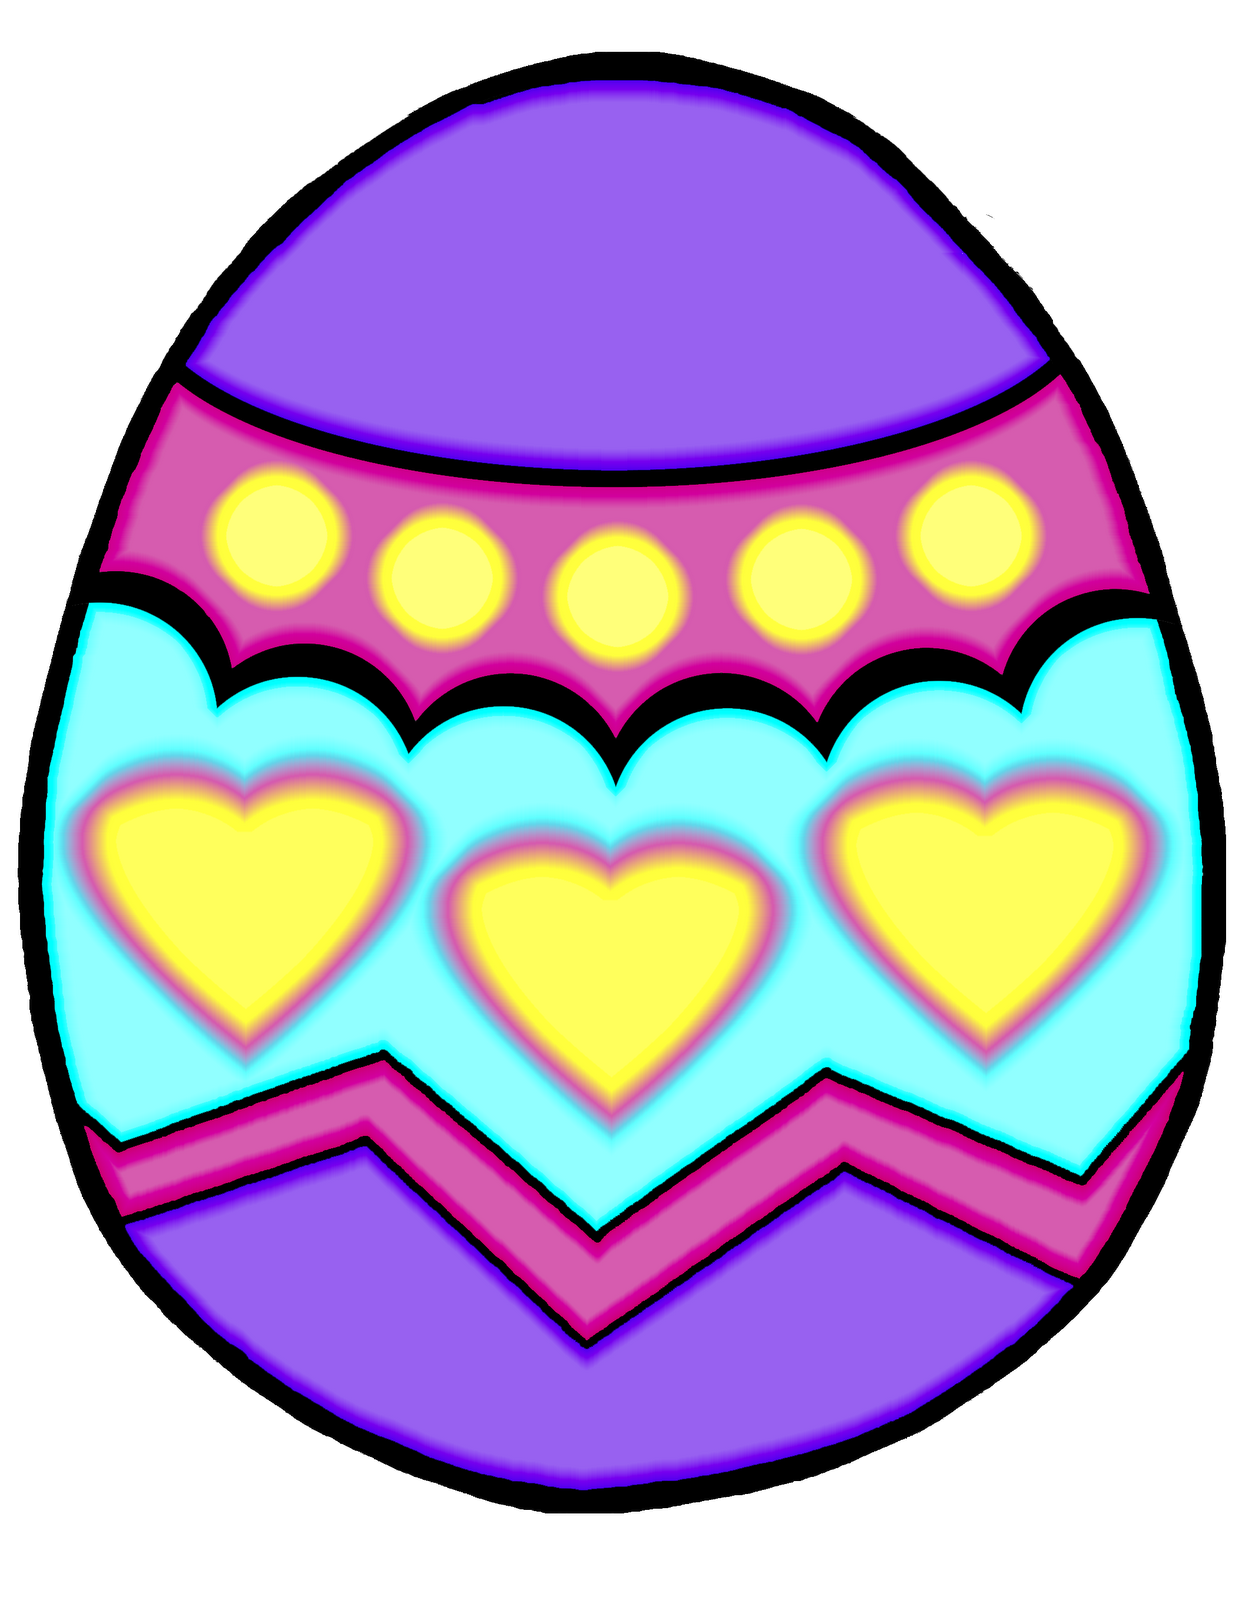 Easter Egg Images Free